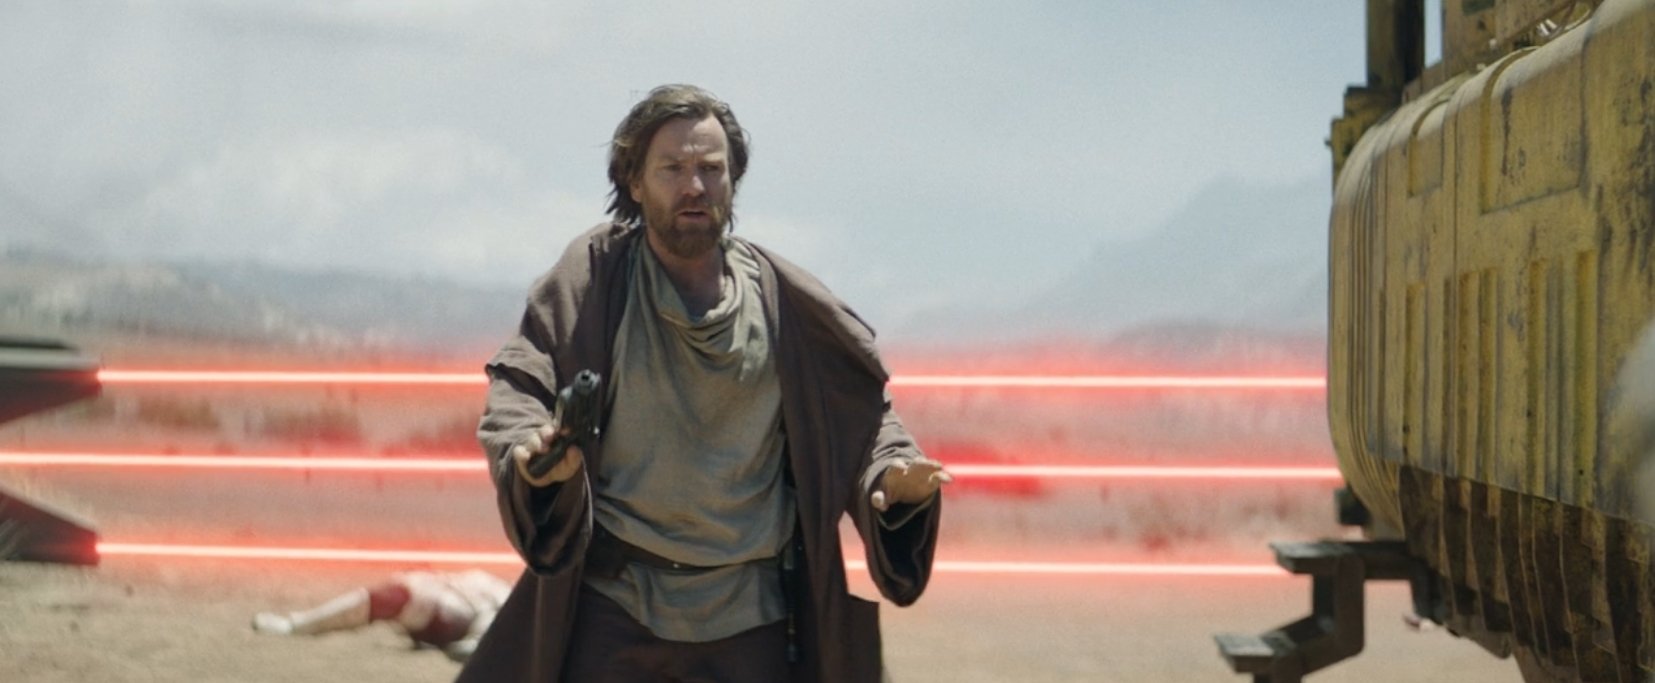 Obi-Wan Kenobi' season 2 in the pipeline? Here's what we know